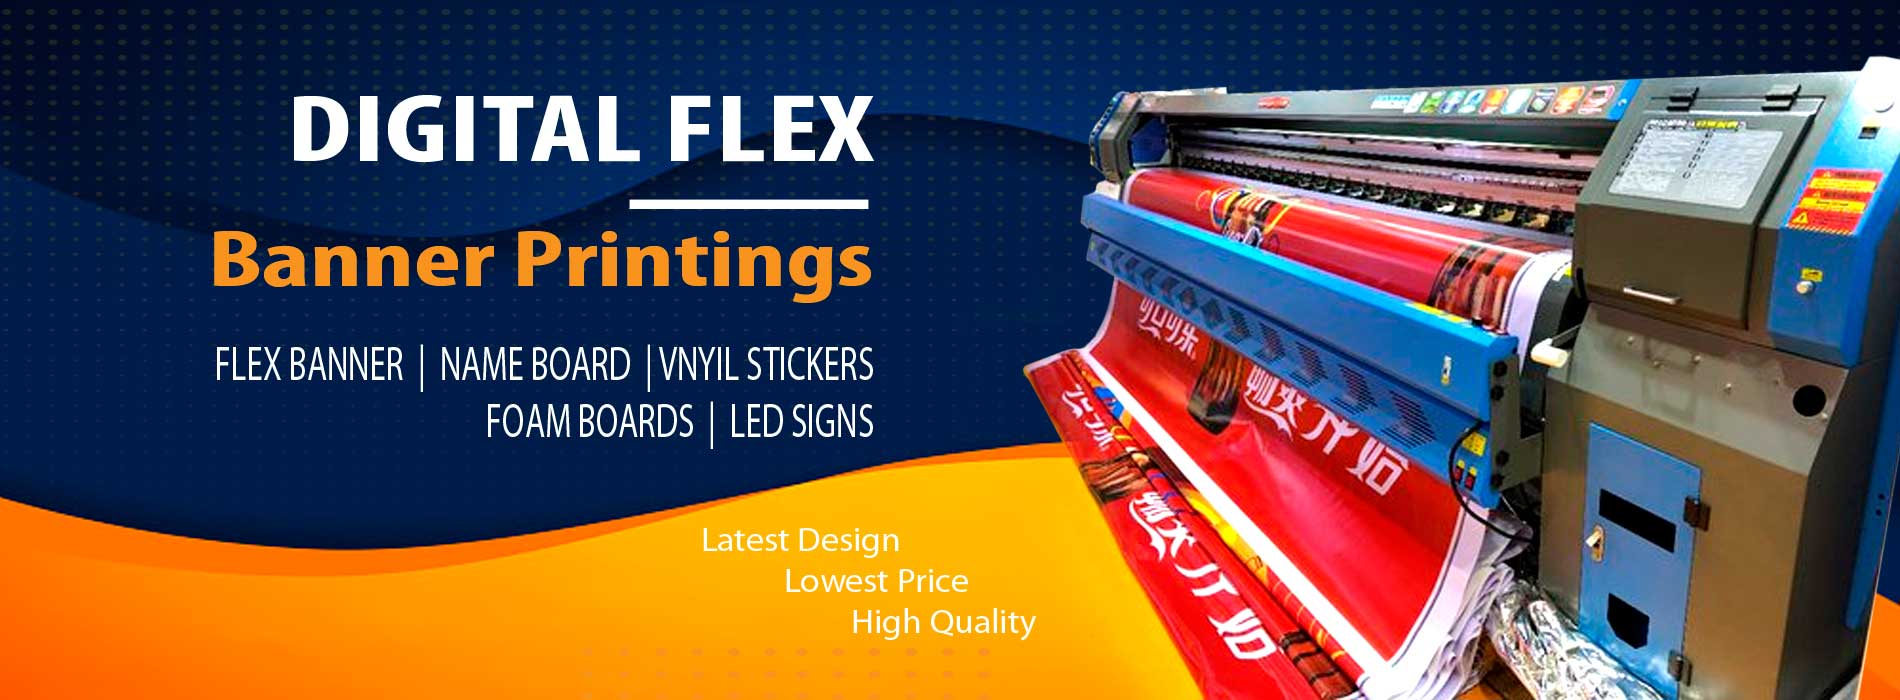 Flex Banner printing work